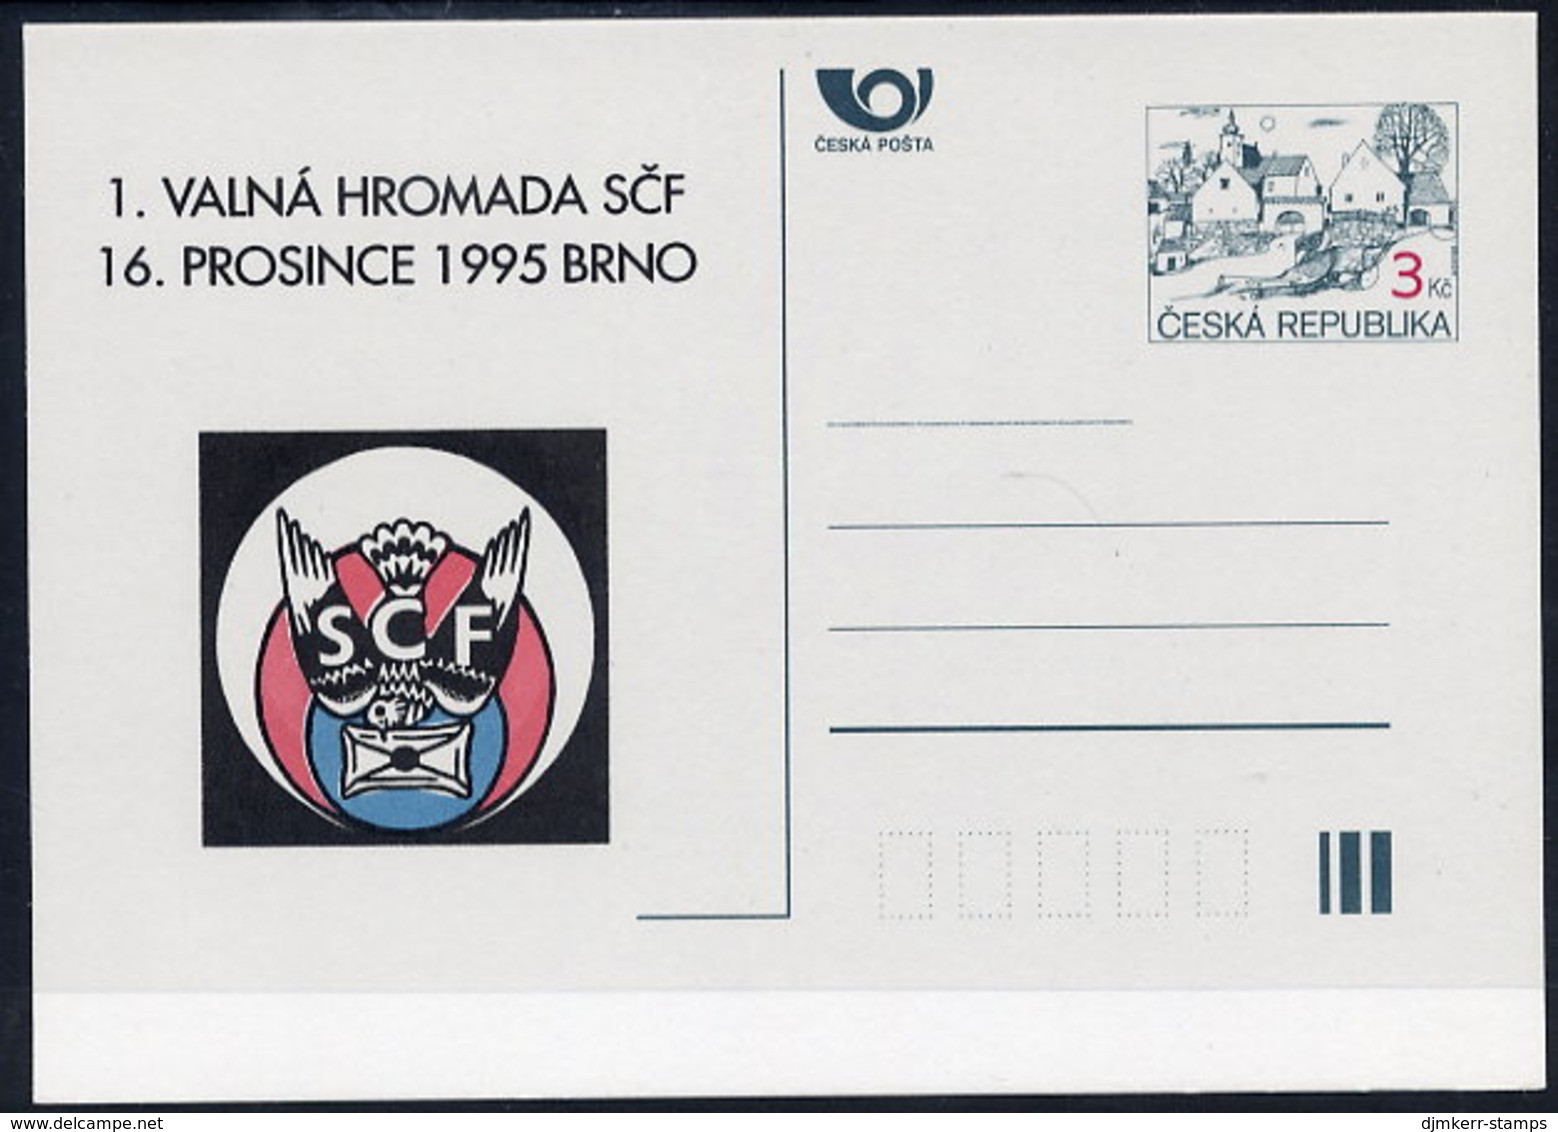 CZECH REPUBLIC 1995 3 Kc. SCF Philatelic Meeting Private Postcard Unused. - Cartes Postales